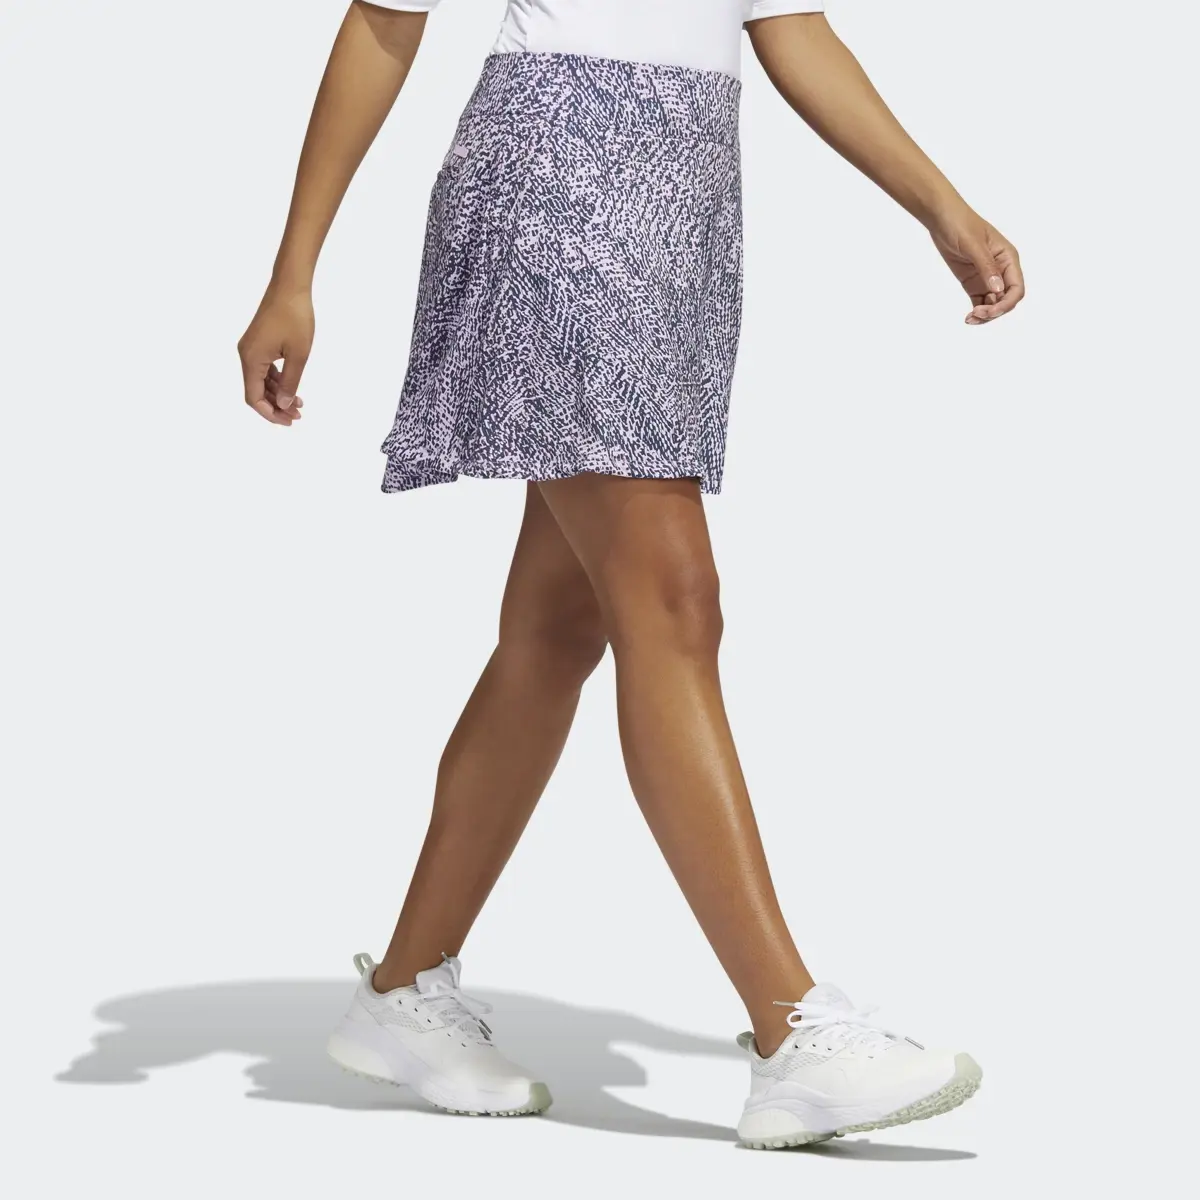 Adidas Printed Frill Golf Skirt. 3